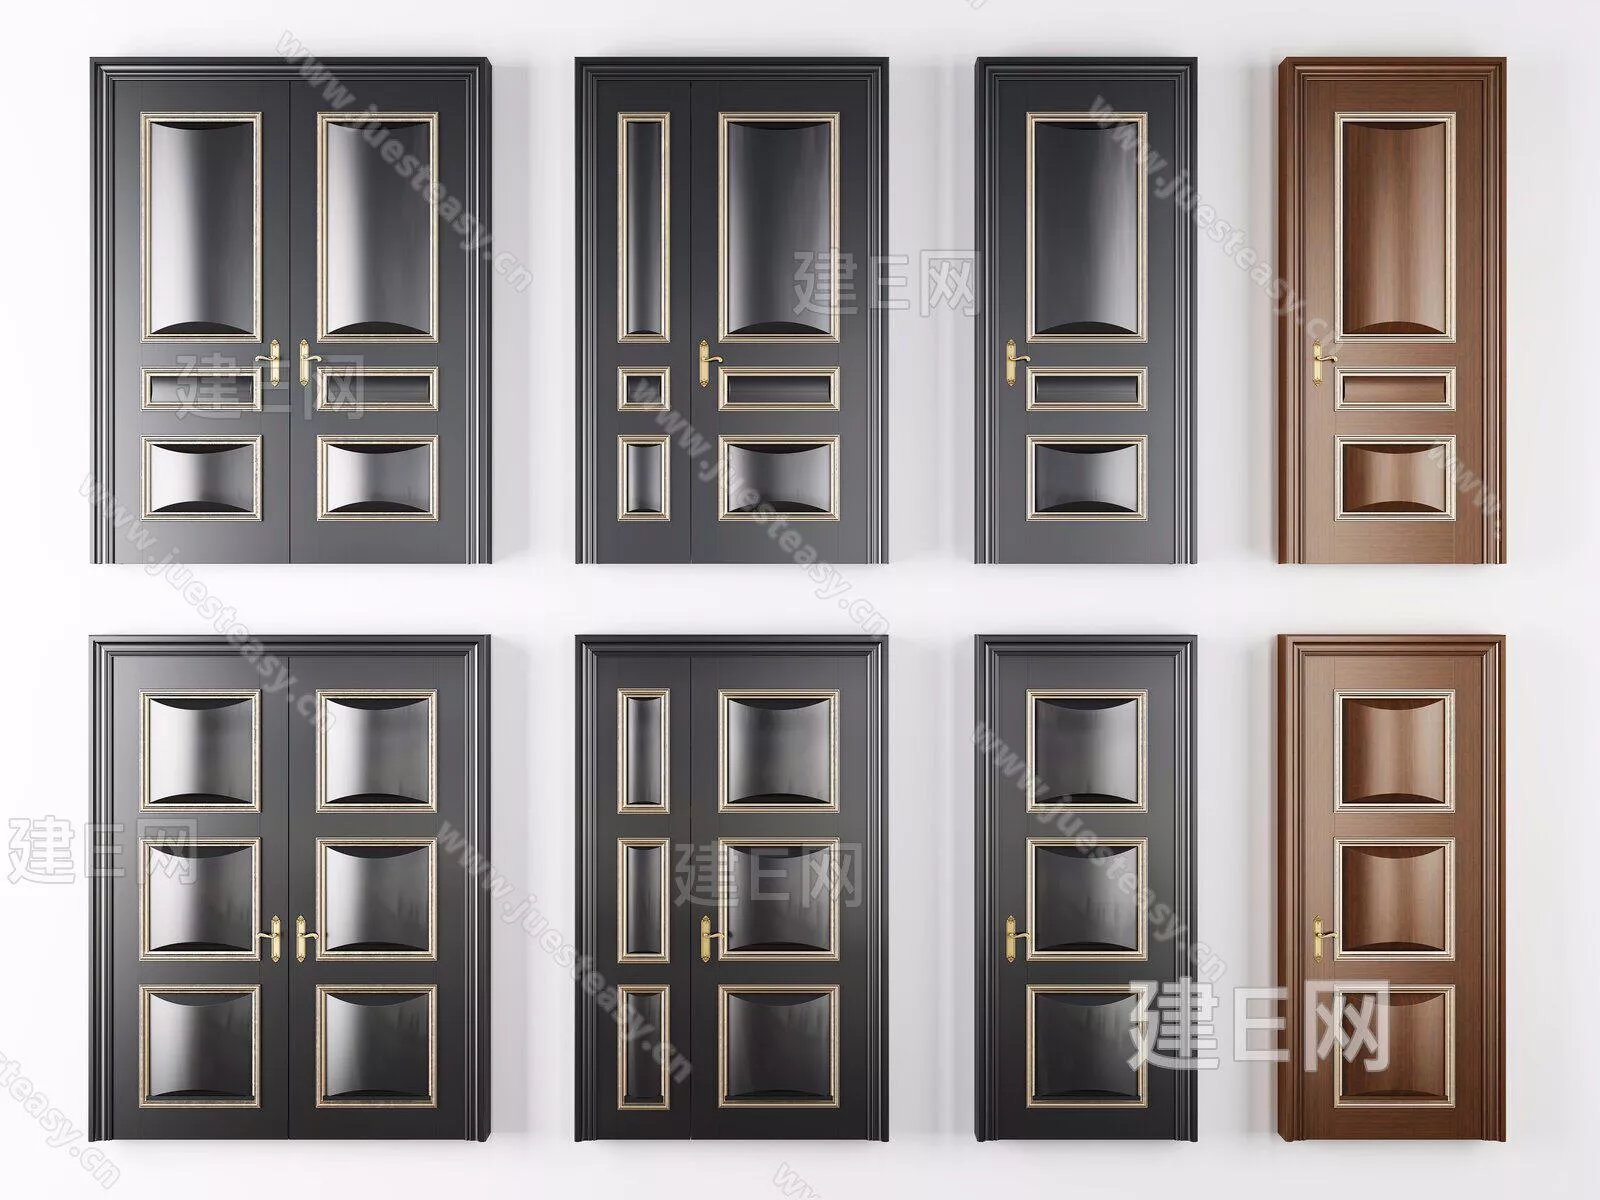 MODERN DOOR AND WINDOWS - SKETCHUP 3D MODEL - ENSCAPE - 110775736